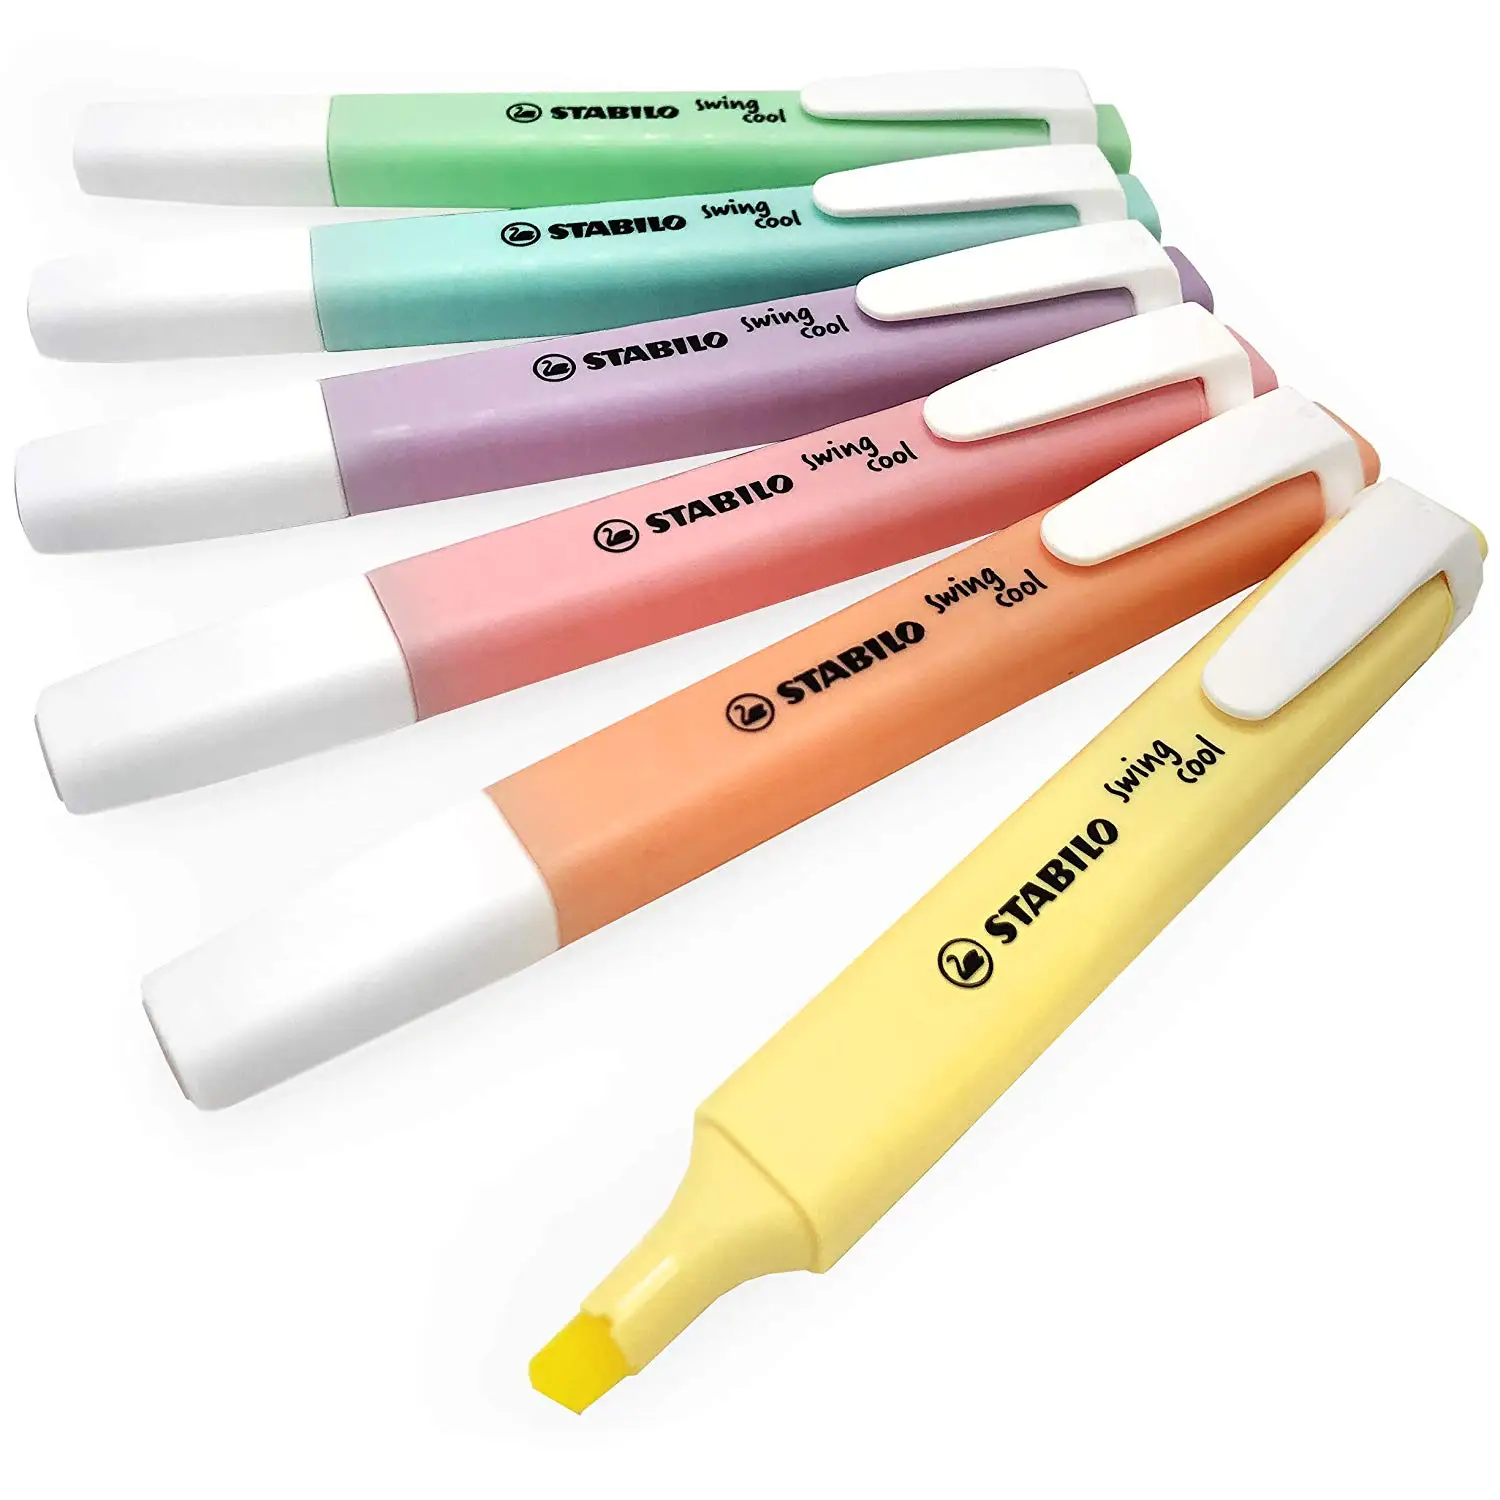 Stabilo Swing Cool Highlighter Pen Permanent Subrayadores Color Pastel  Markers Journal Supplies Fosforlu Kalem Stationery - AliExpress